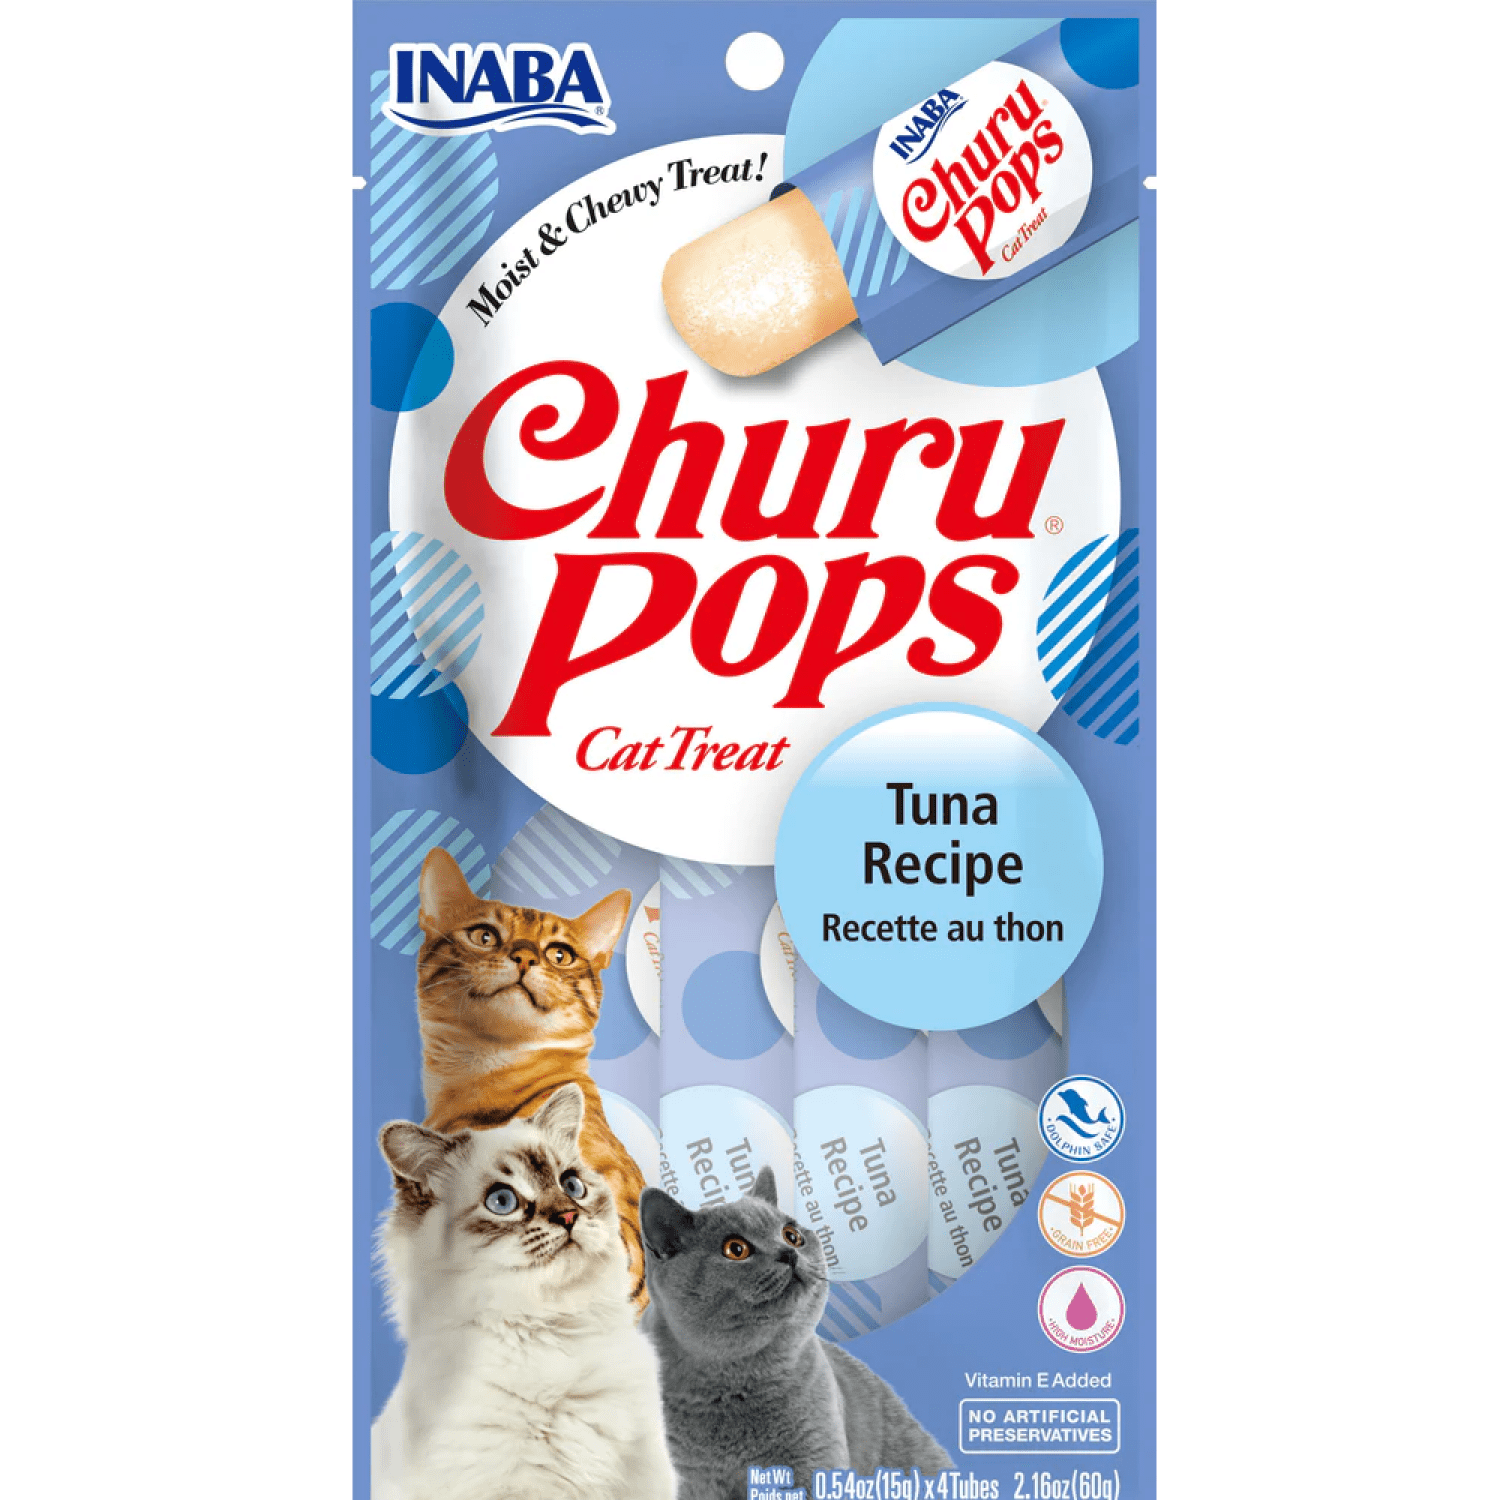 INABA Churu Pops Tuna Creamy Cat Treats